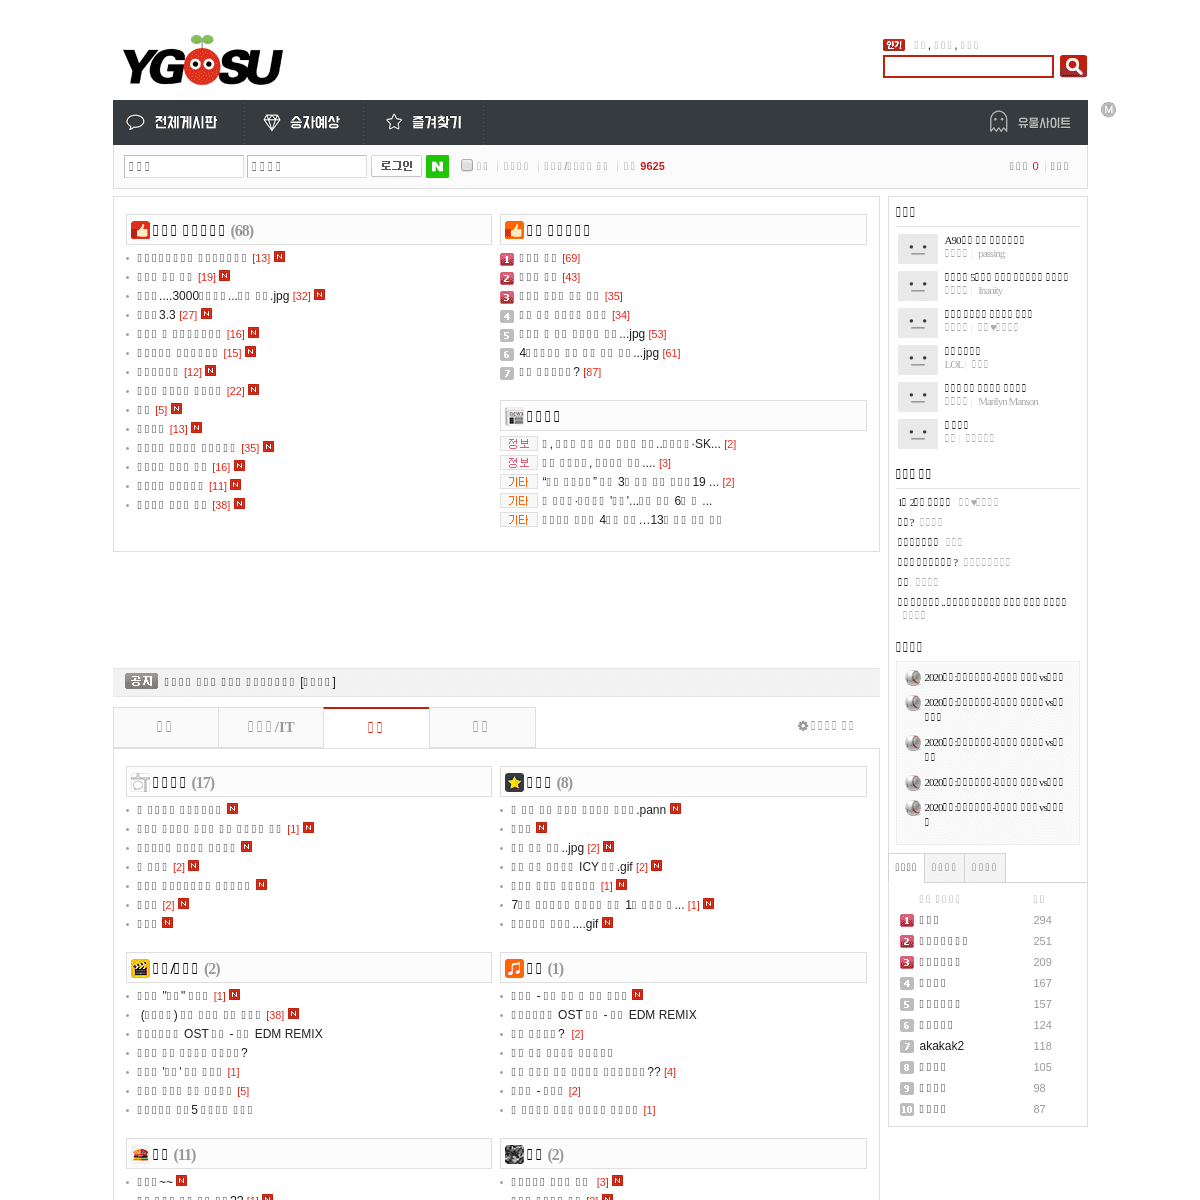 A complete backup of ygosu.com